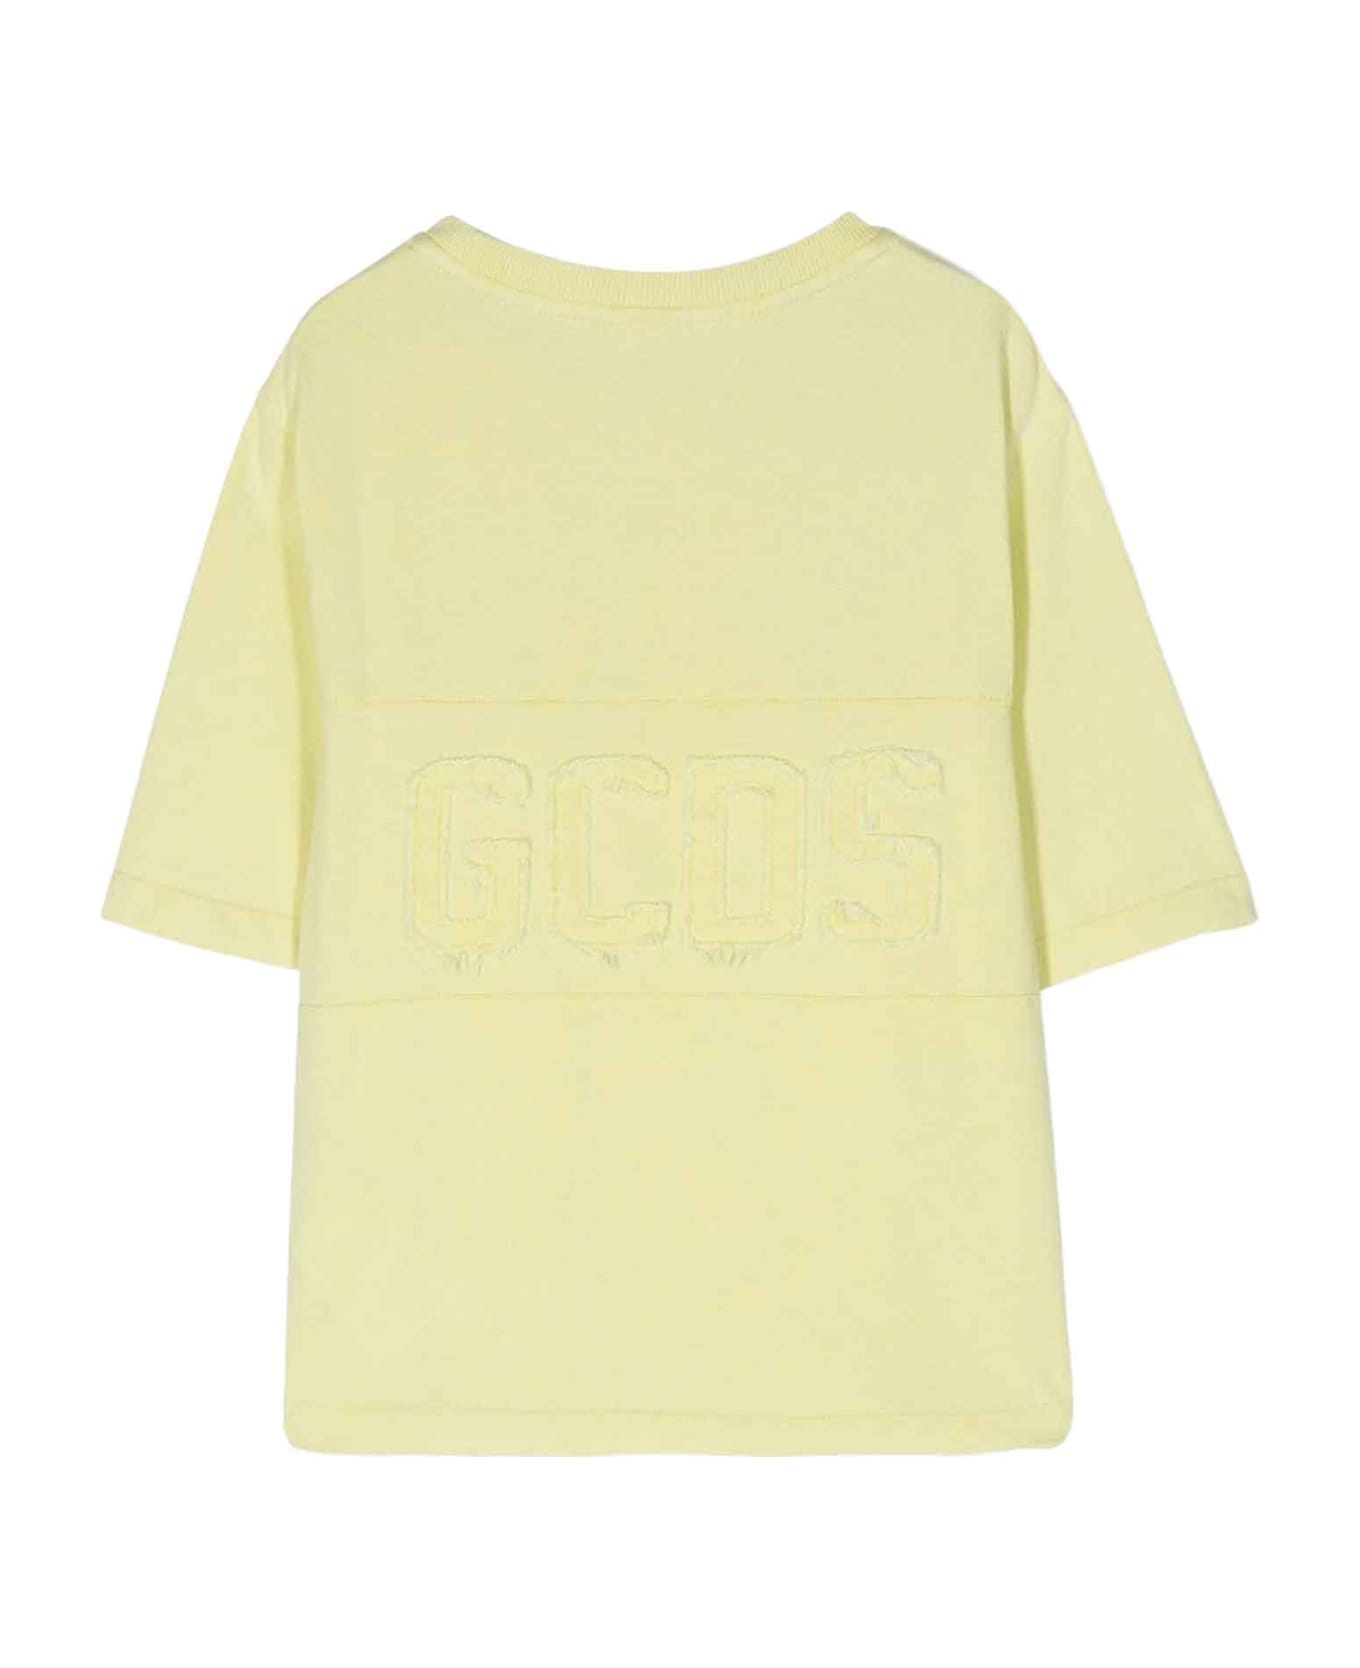 GCDS Blanc Lime T-shirt Unisex - Lime